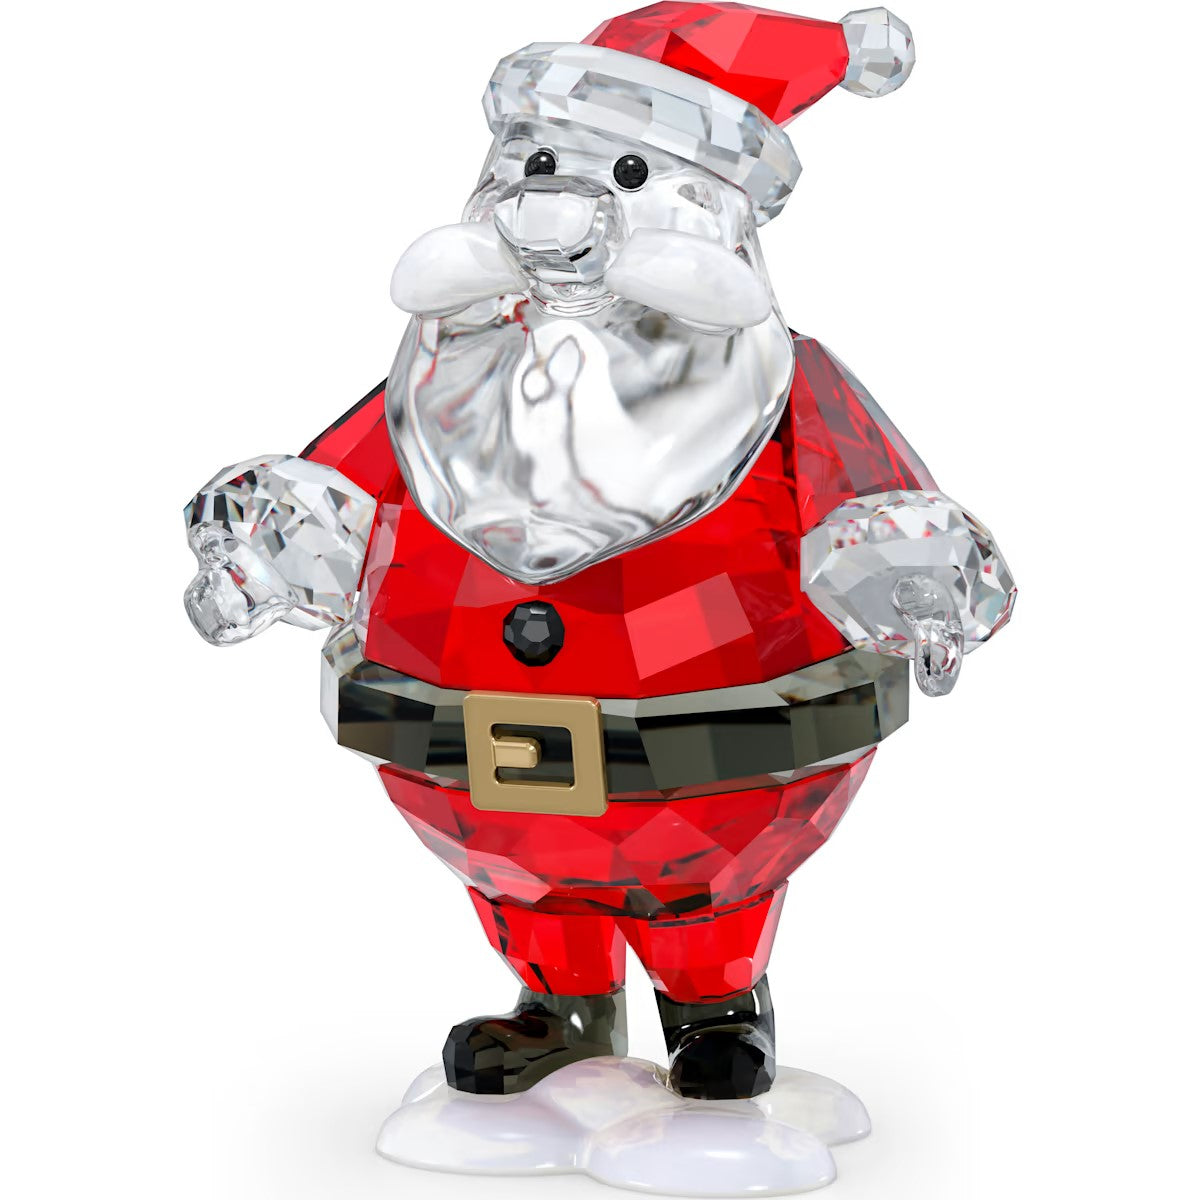 Swarovski Holiday Cheers Santa Claus - 5630337